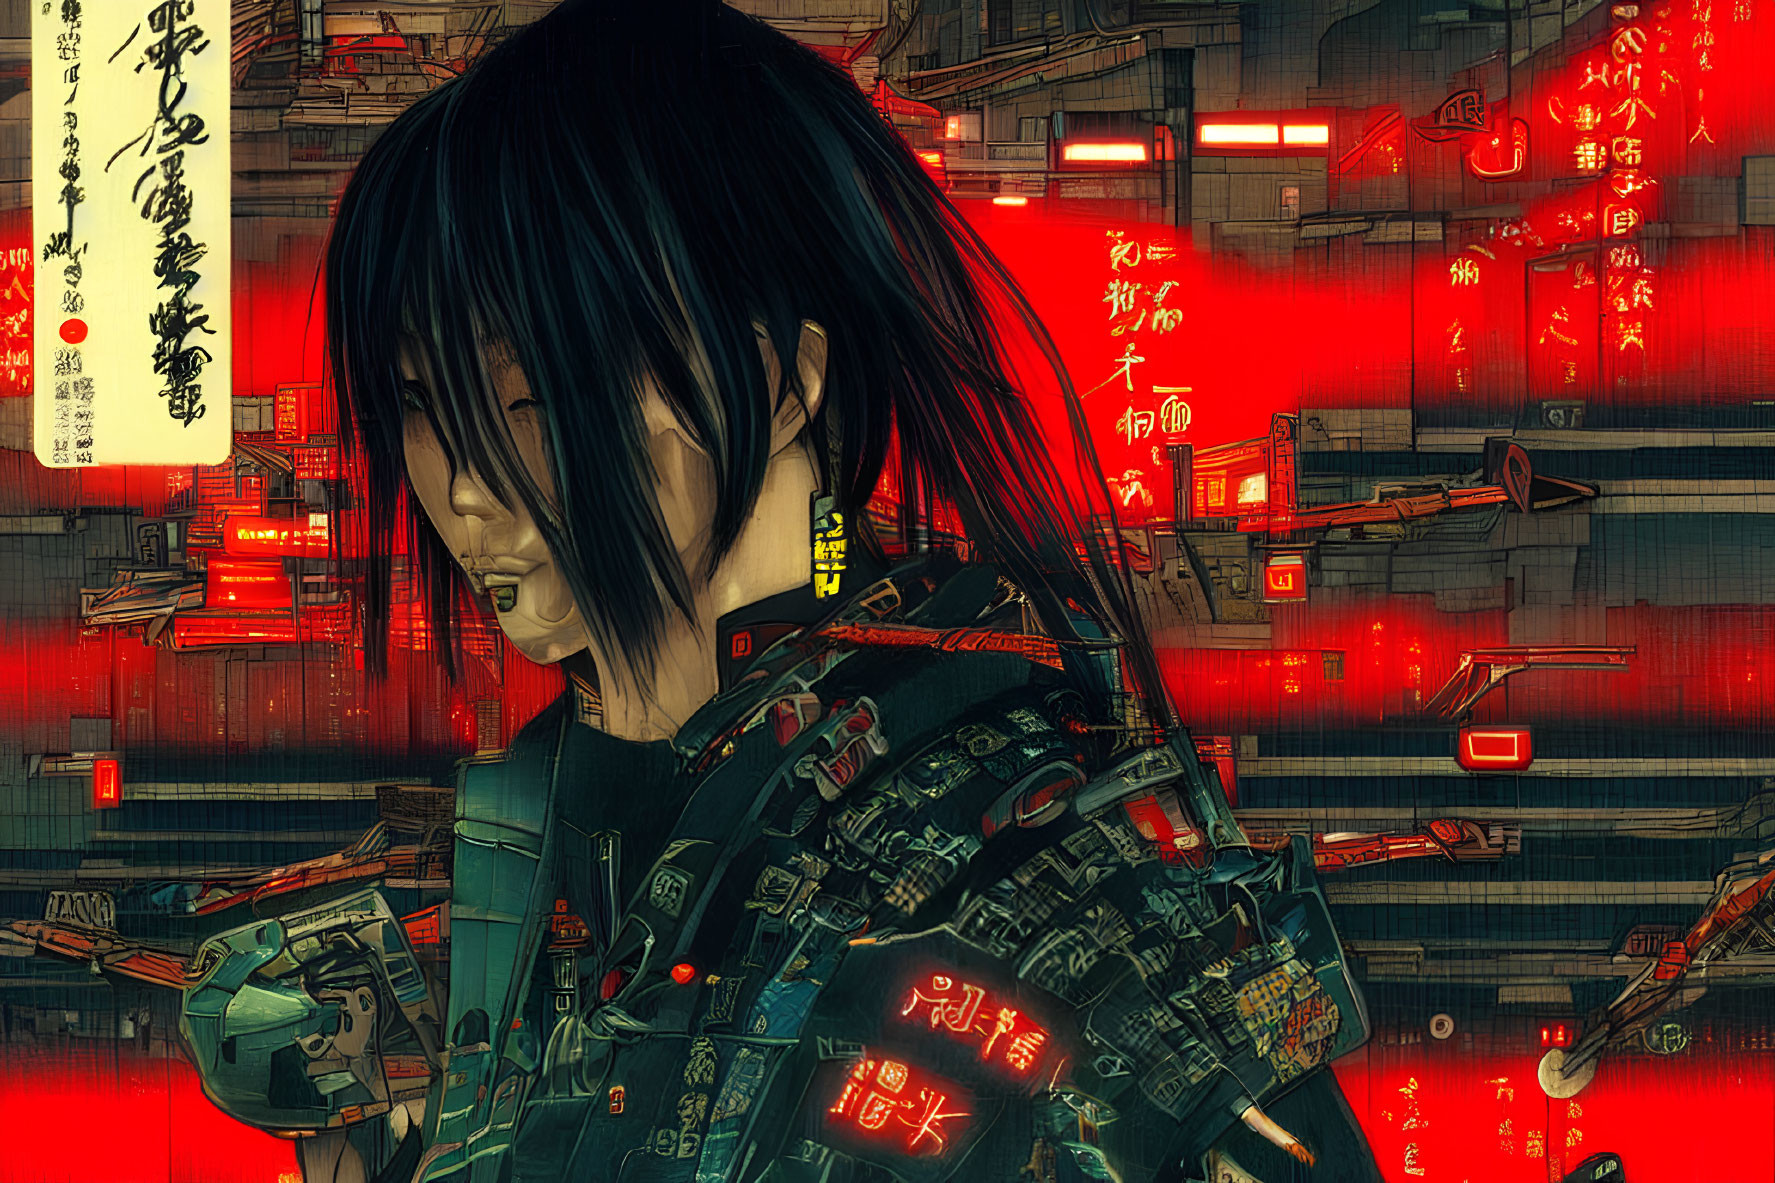 Futuristic cyberpunk art with figure in high-tech armor in neon-lit cityscape